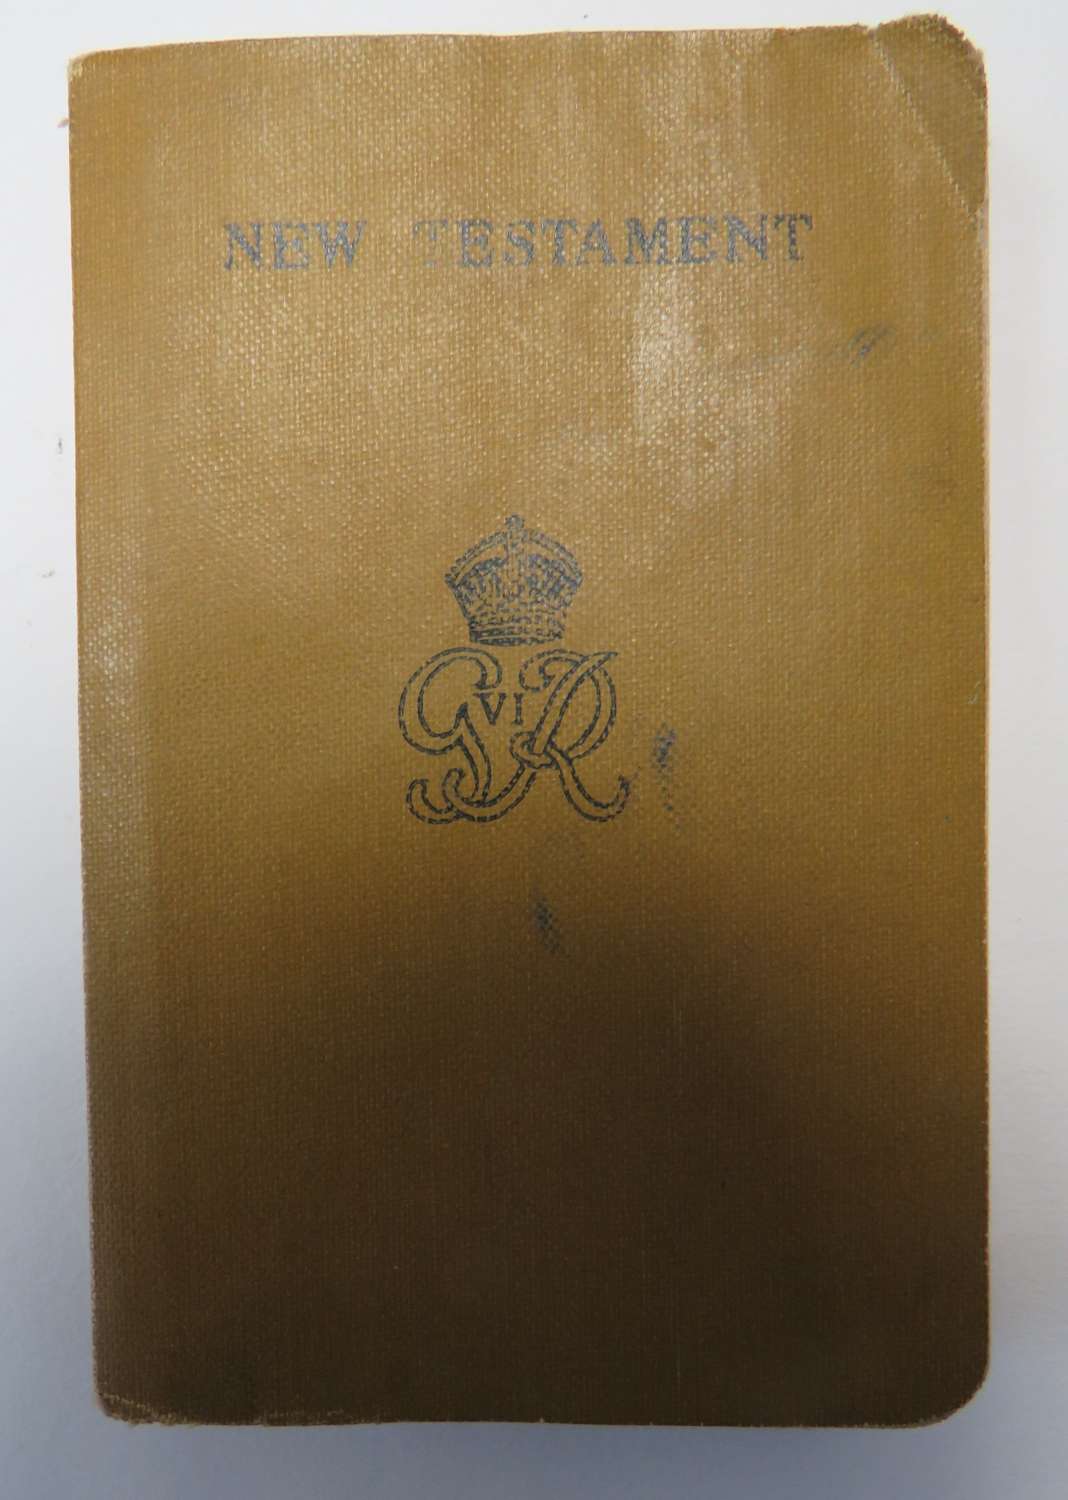 WW2 Issue New Testament Bible